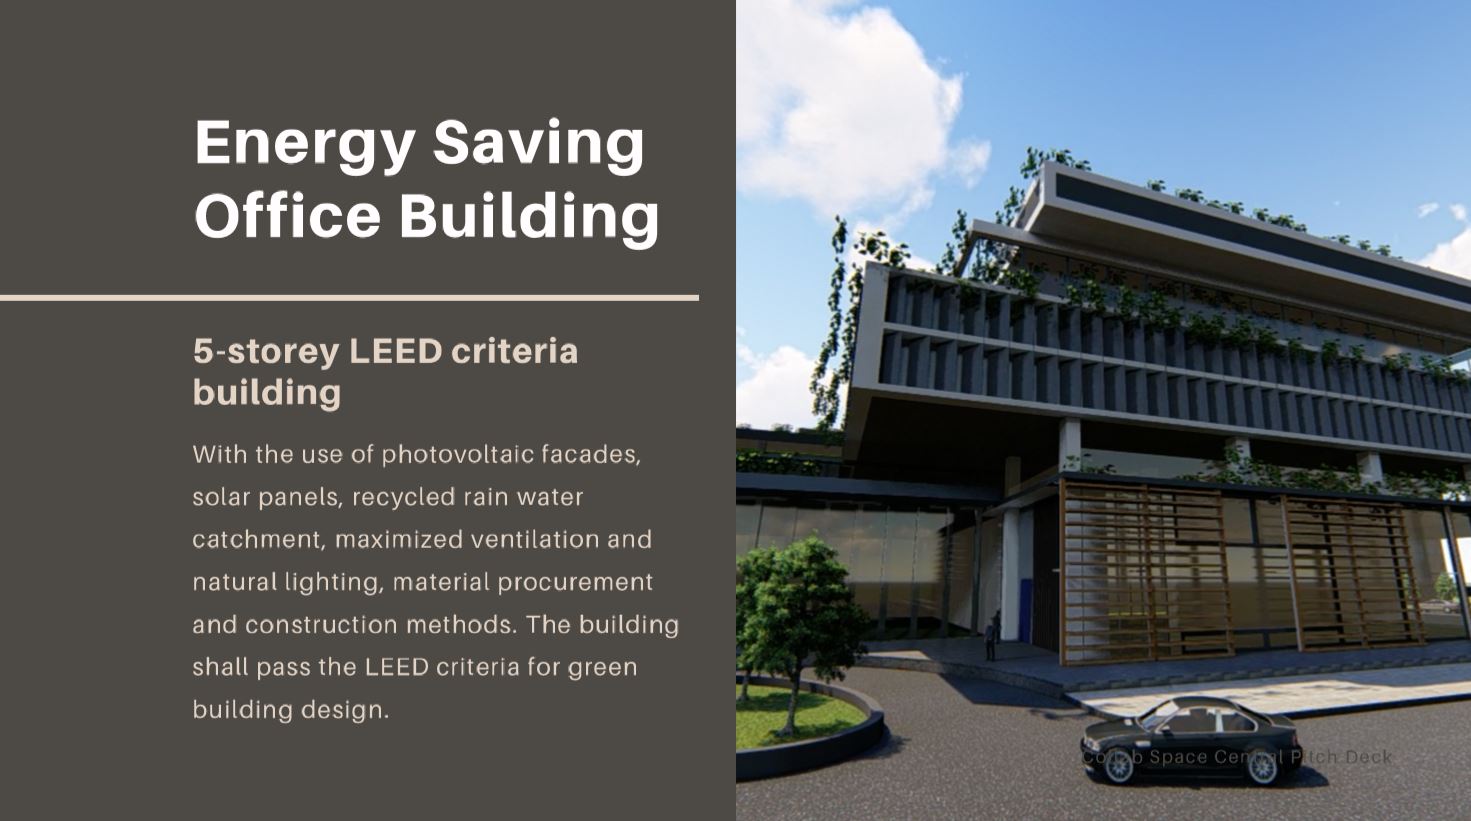 Energy-Saving Office Building